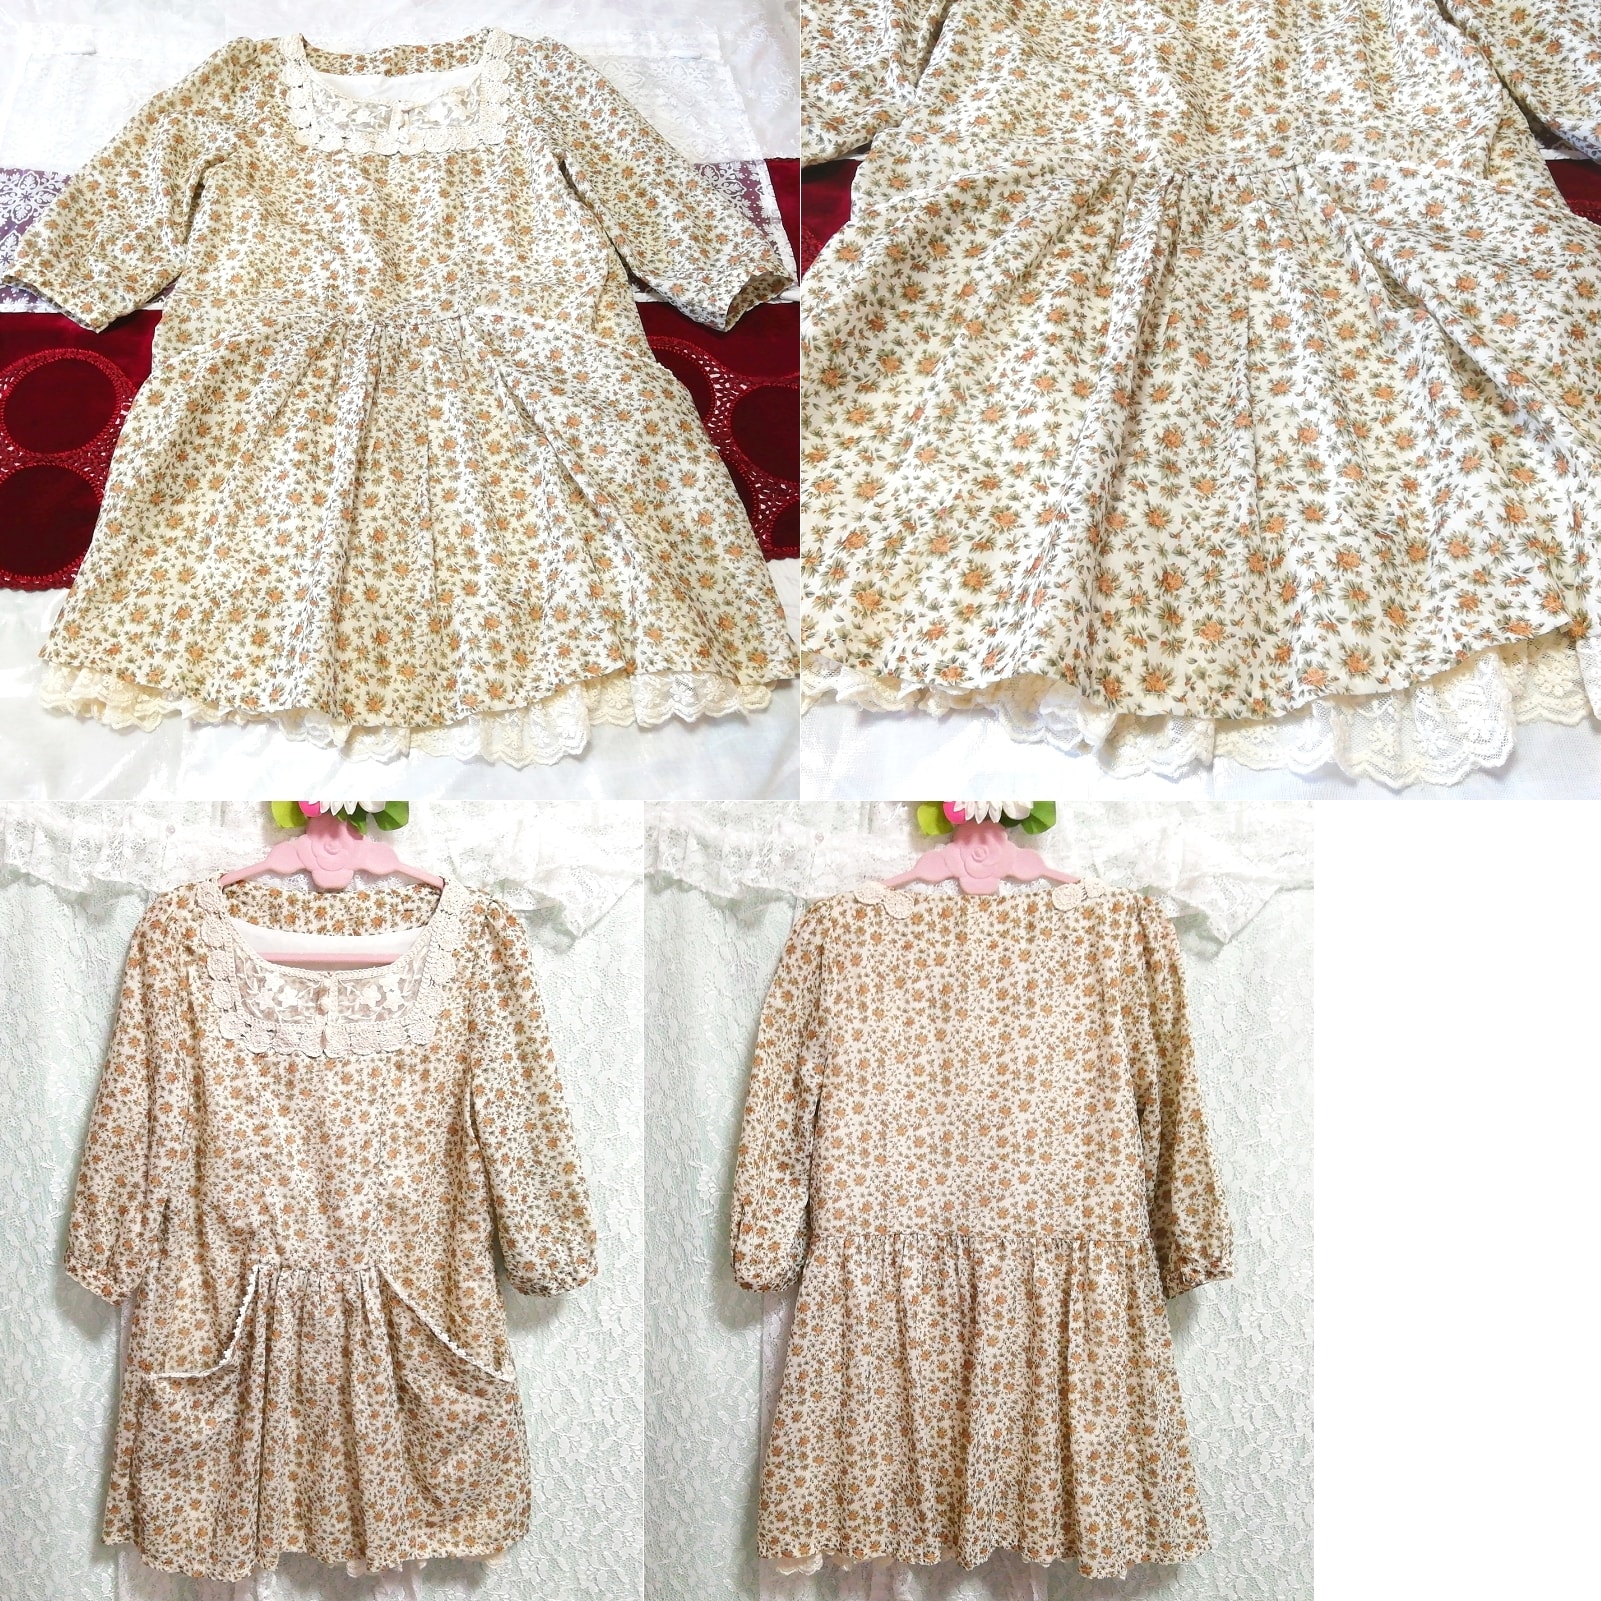 Sunflower pattern cotton white lace long sleeve tunic negligee nightgown dress, tunic, long sleeve, m size